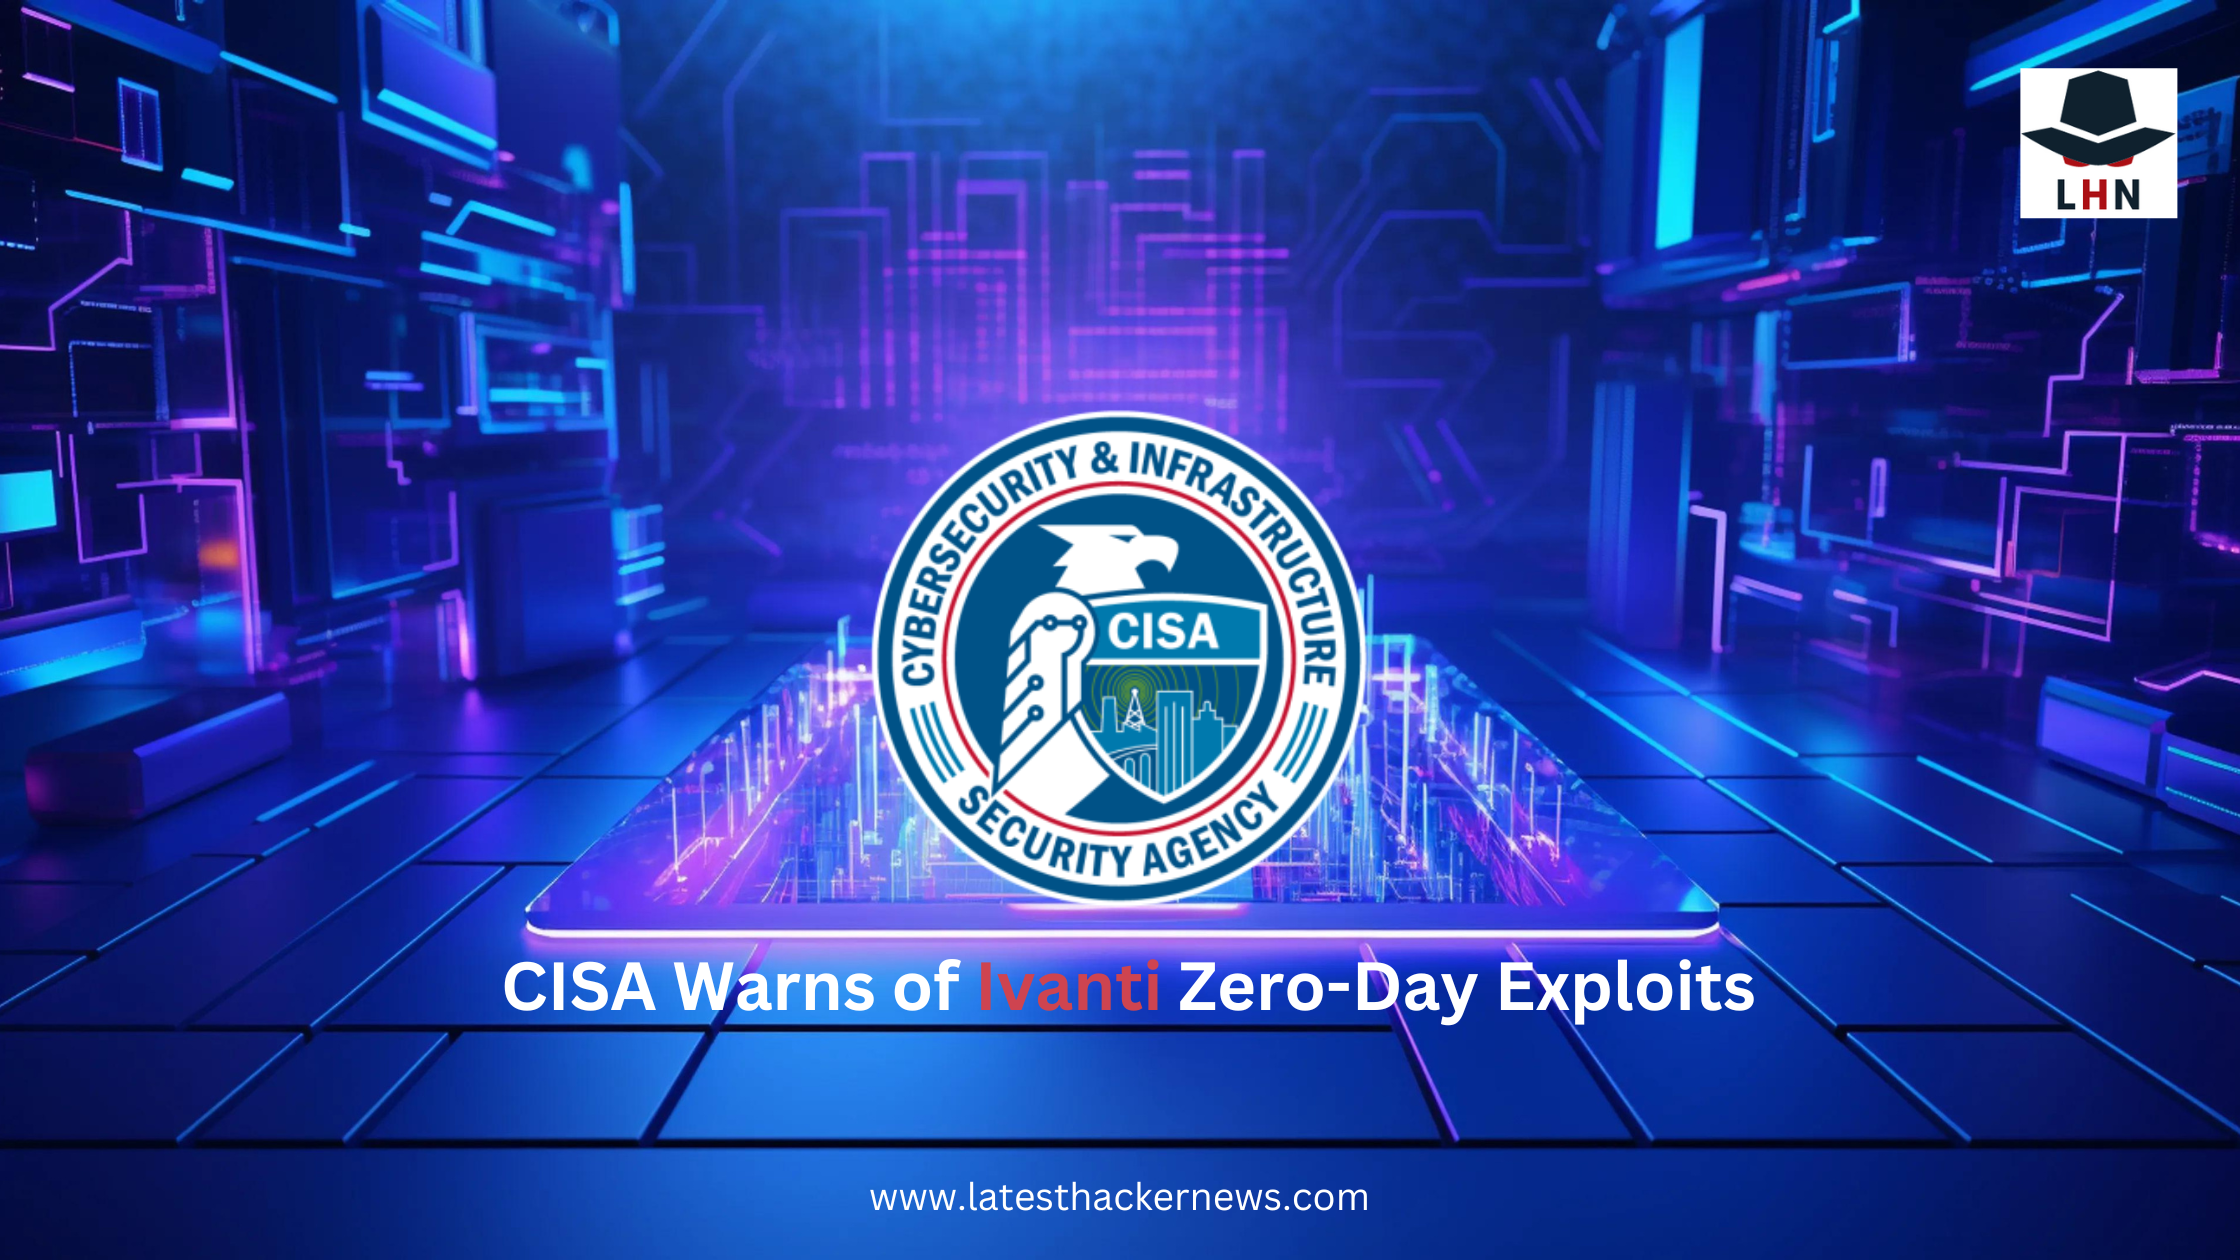 CISA Warns of Ivanti Zero-Day Exploits